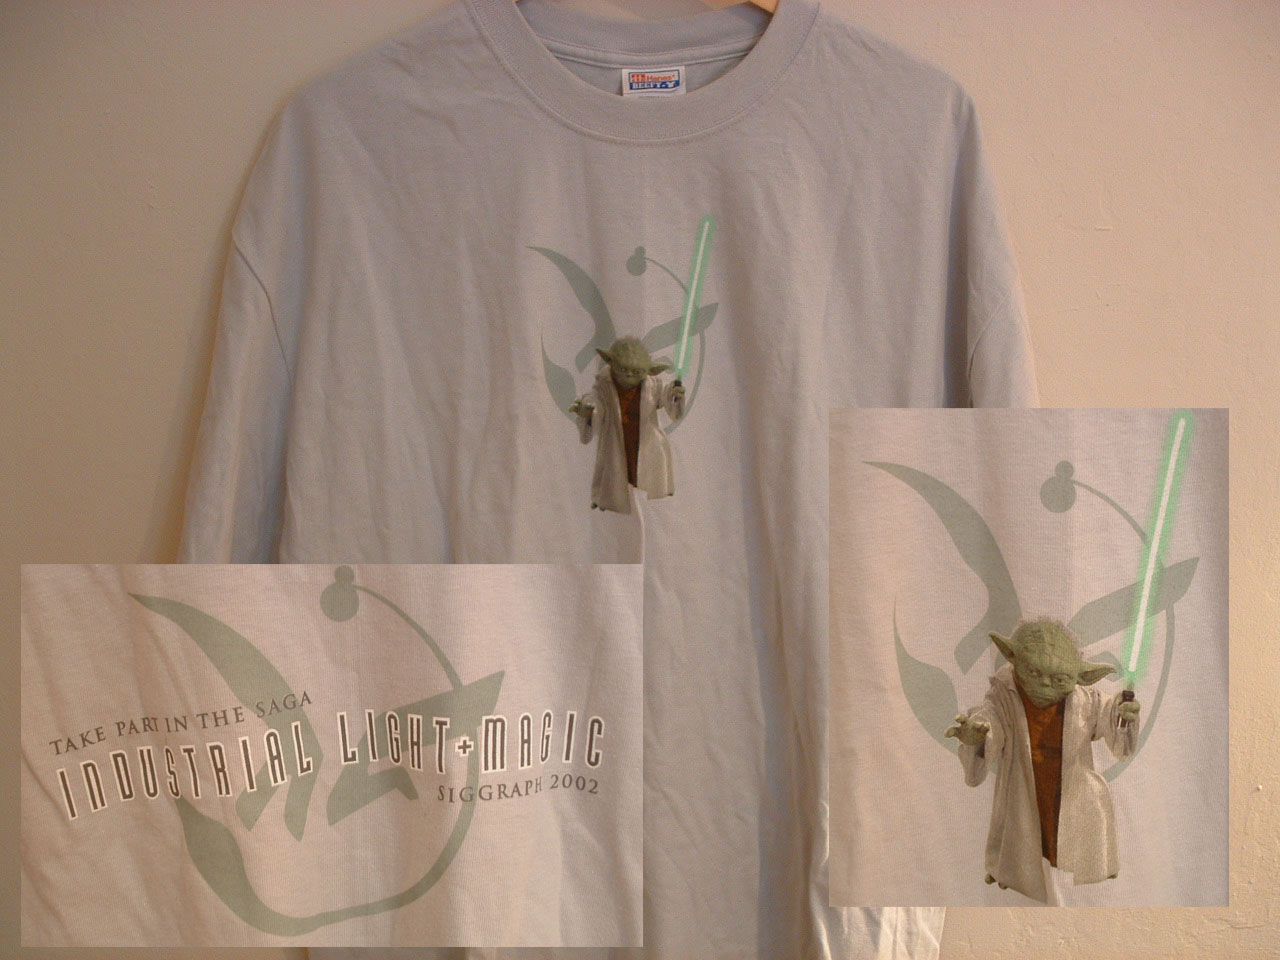 ILM Siggraph 2002 shirt with Yoda